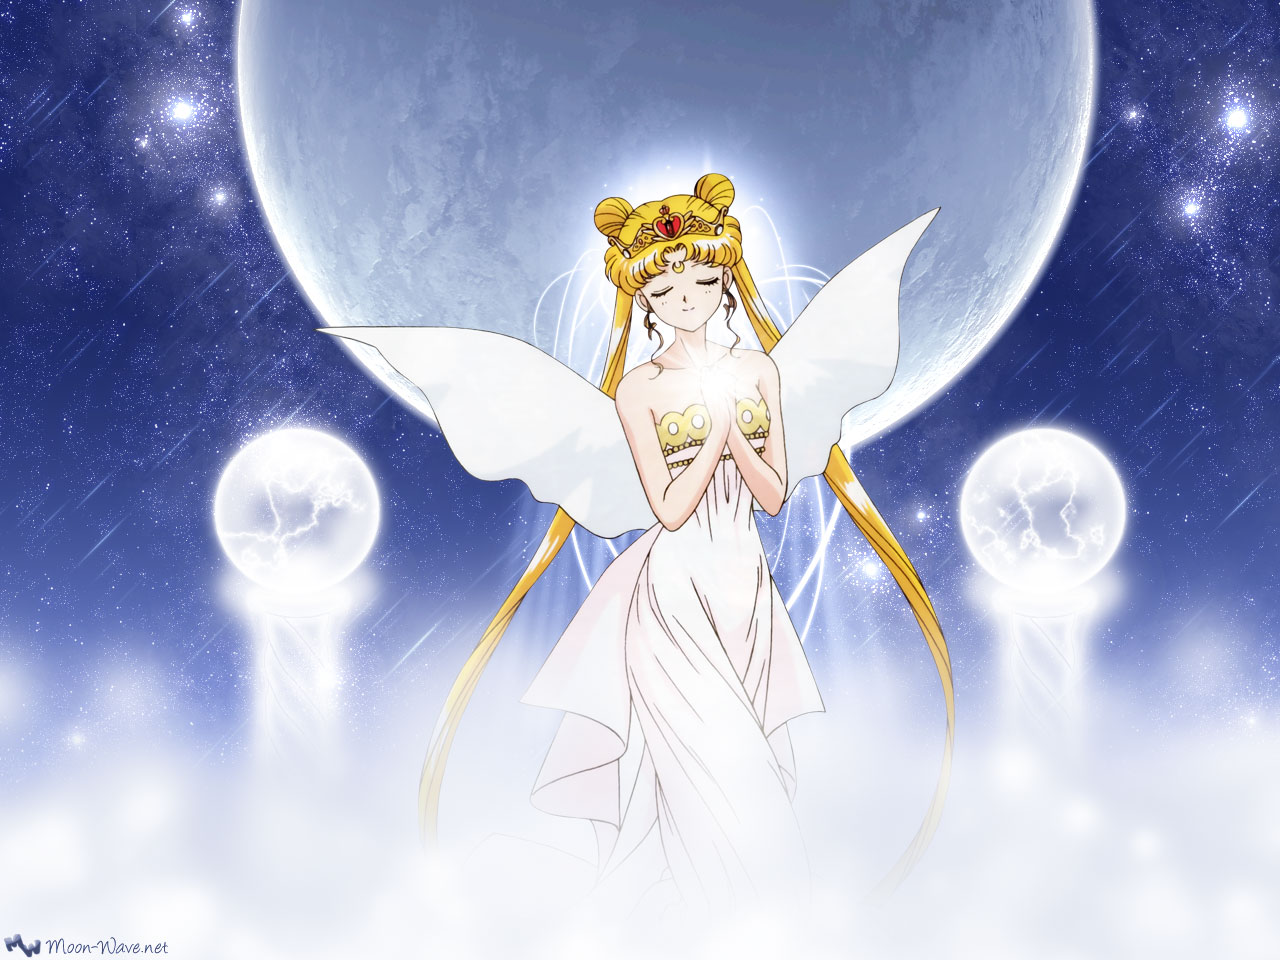 Free download Kawaii Wallpaper Sailor Moon Wallpaper Serenity Fondos de [1280x960] for your Desktop, Mobile & Tablet. Explore Kawaii Sailor Moon Wallpaper. Kawaii Sailor Moon Wallpaper, Sailor Moon Background